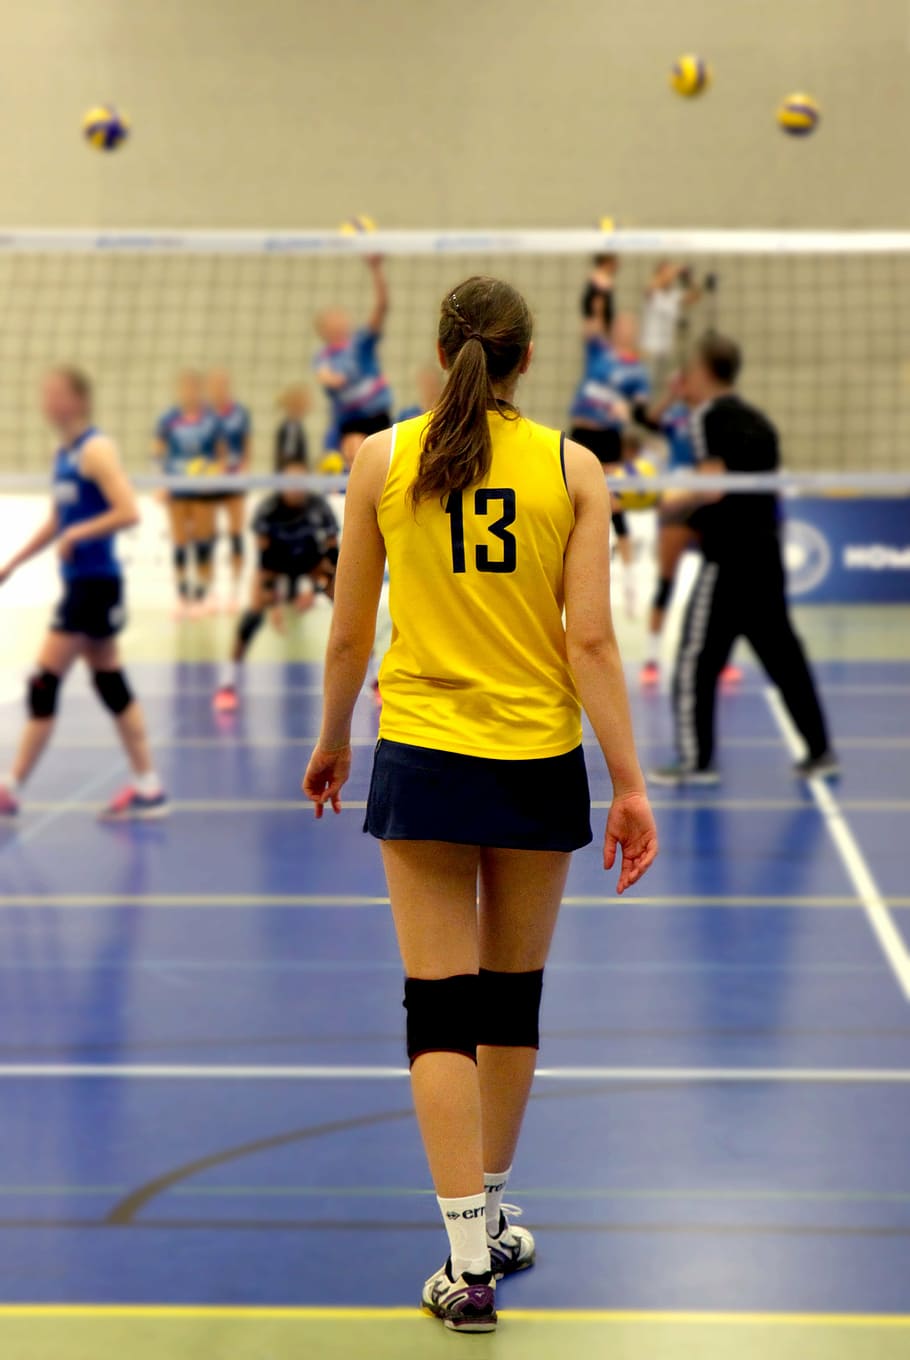 jugador de voleibol, blanco, neto, voleibol, pelota, deportes de pelota, deporte de equipo, competencia, audiencia, espectadores